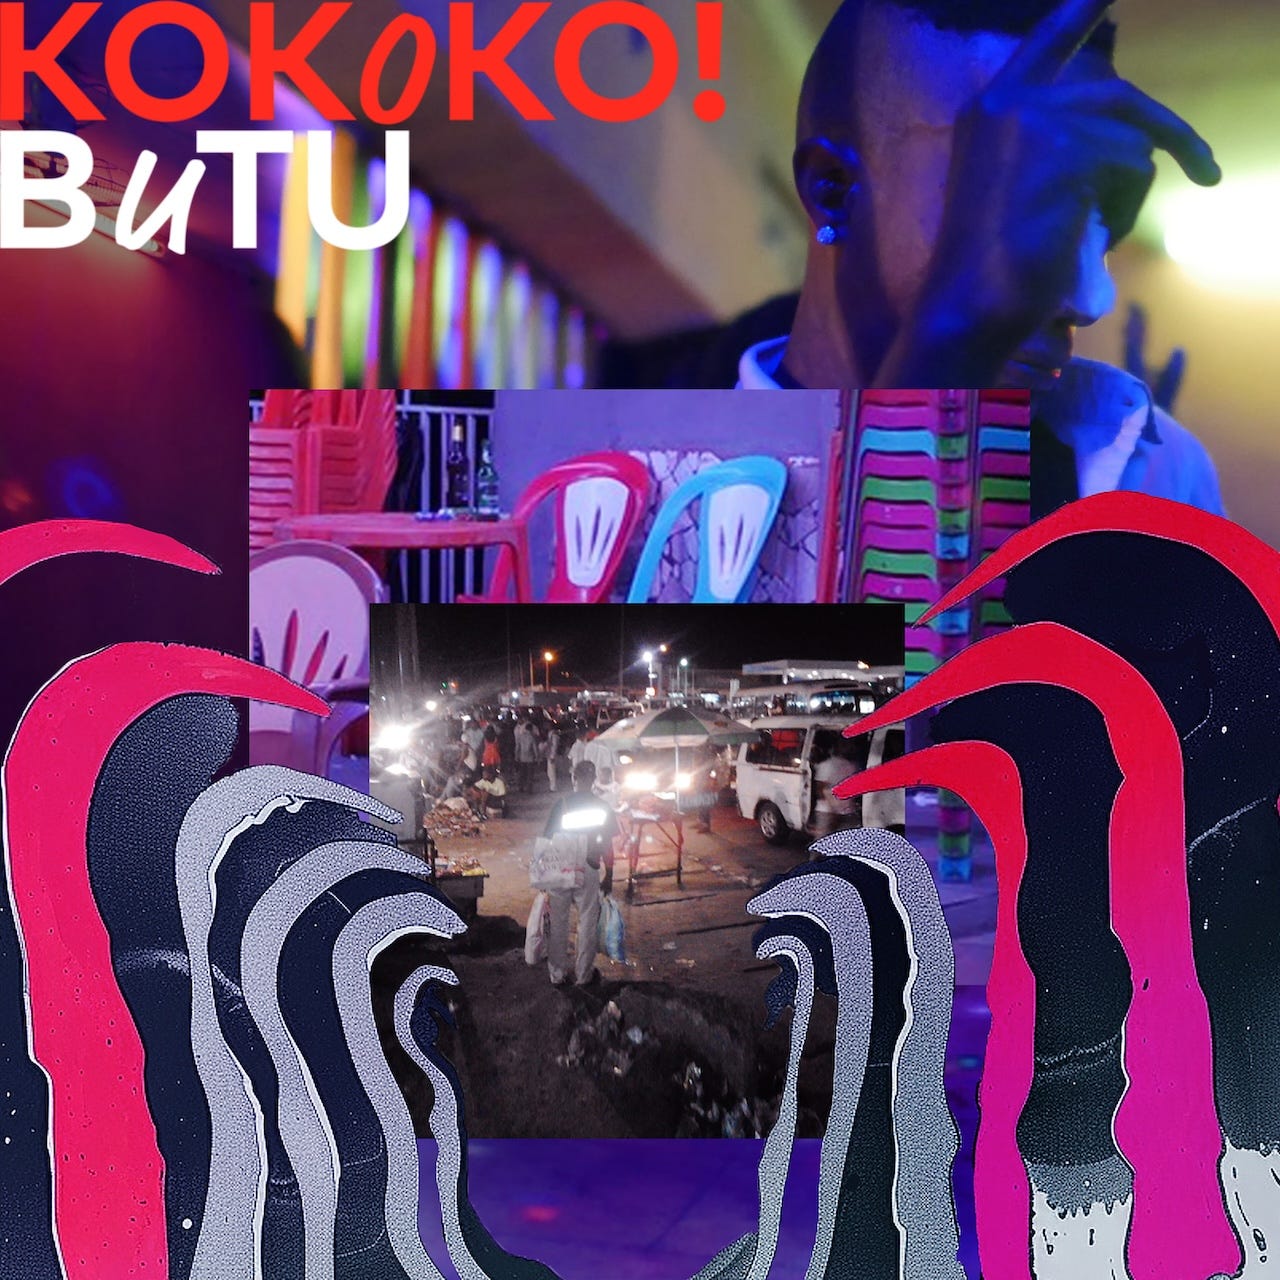 Album: Kokoko - Butu | The Arts Desk